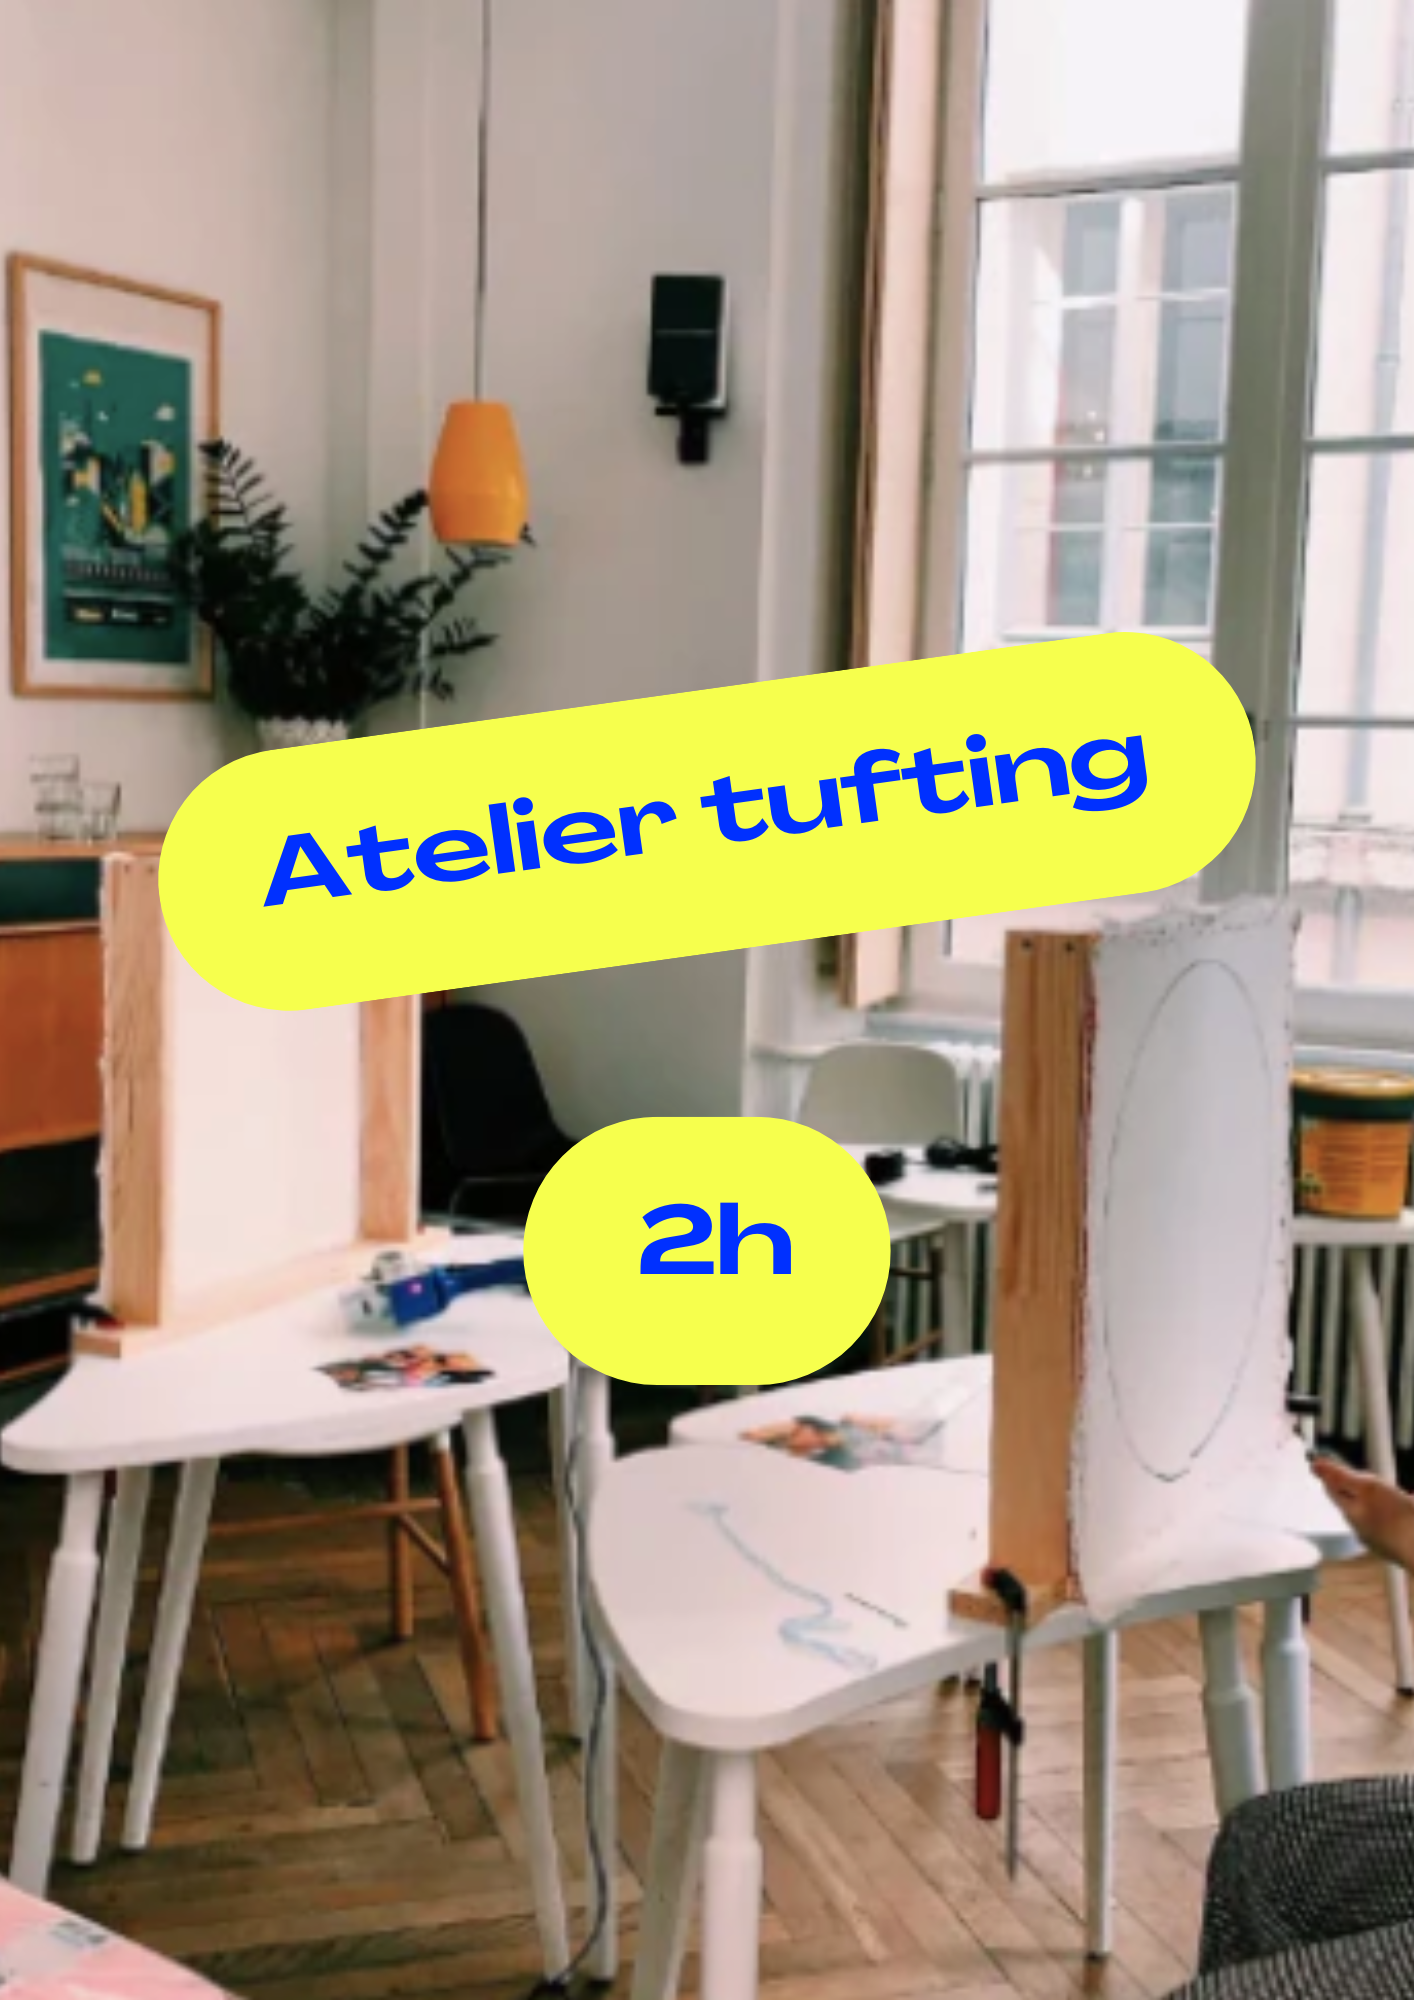 Atelier Tufting 2h / 1 août  18h - 20h